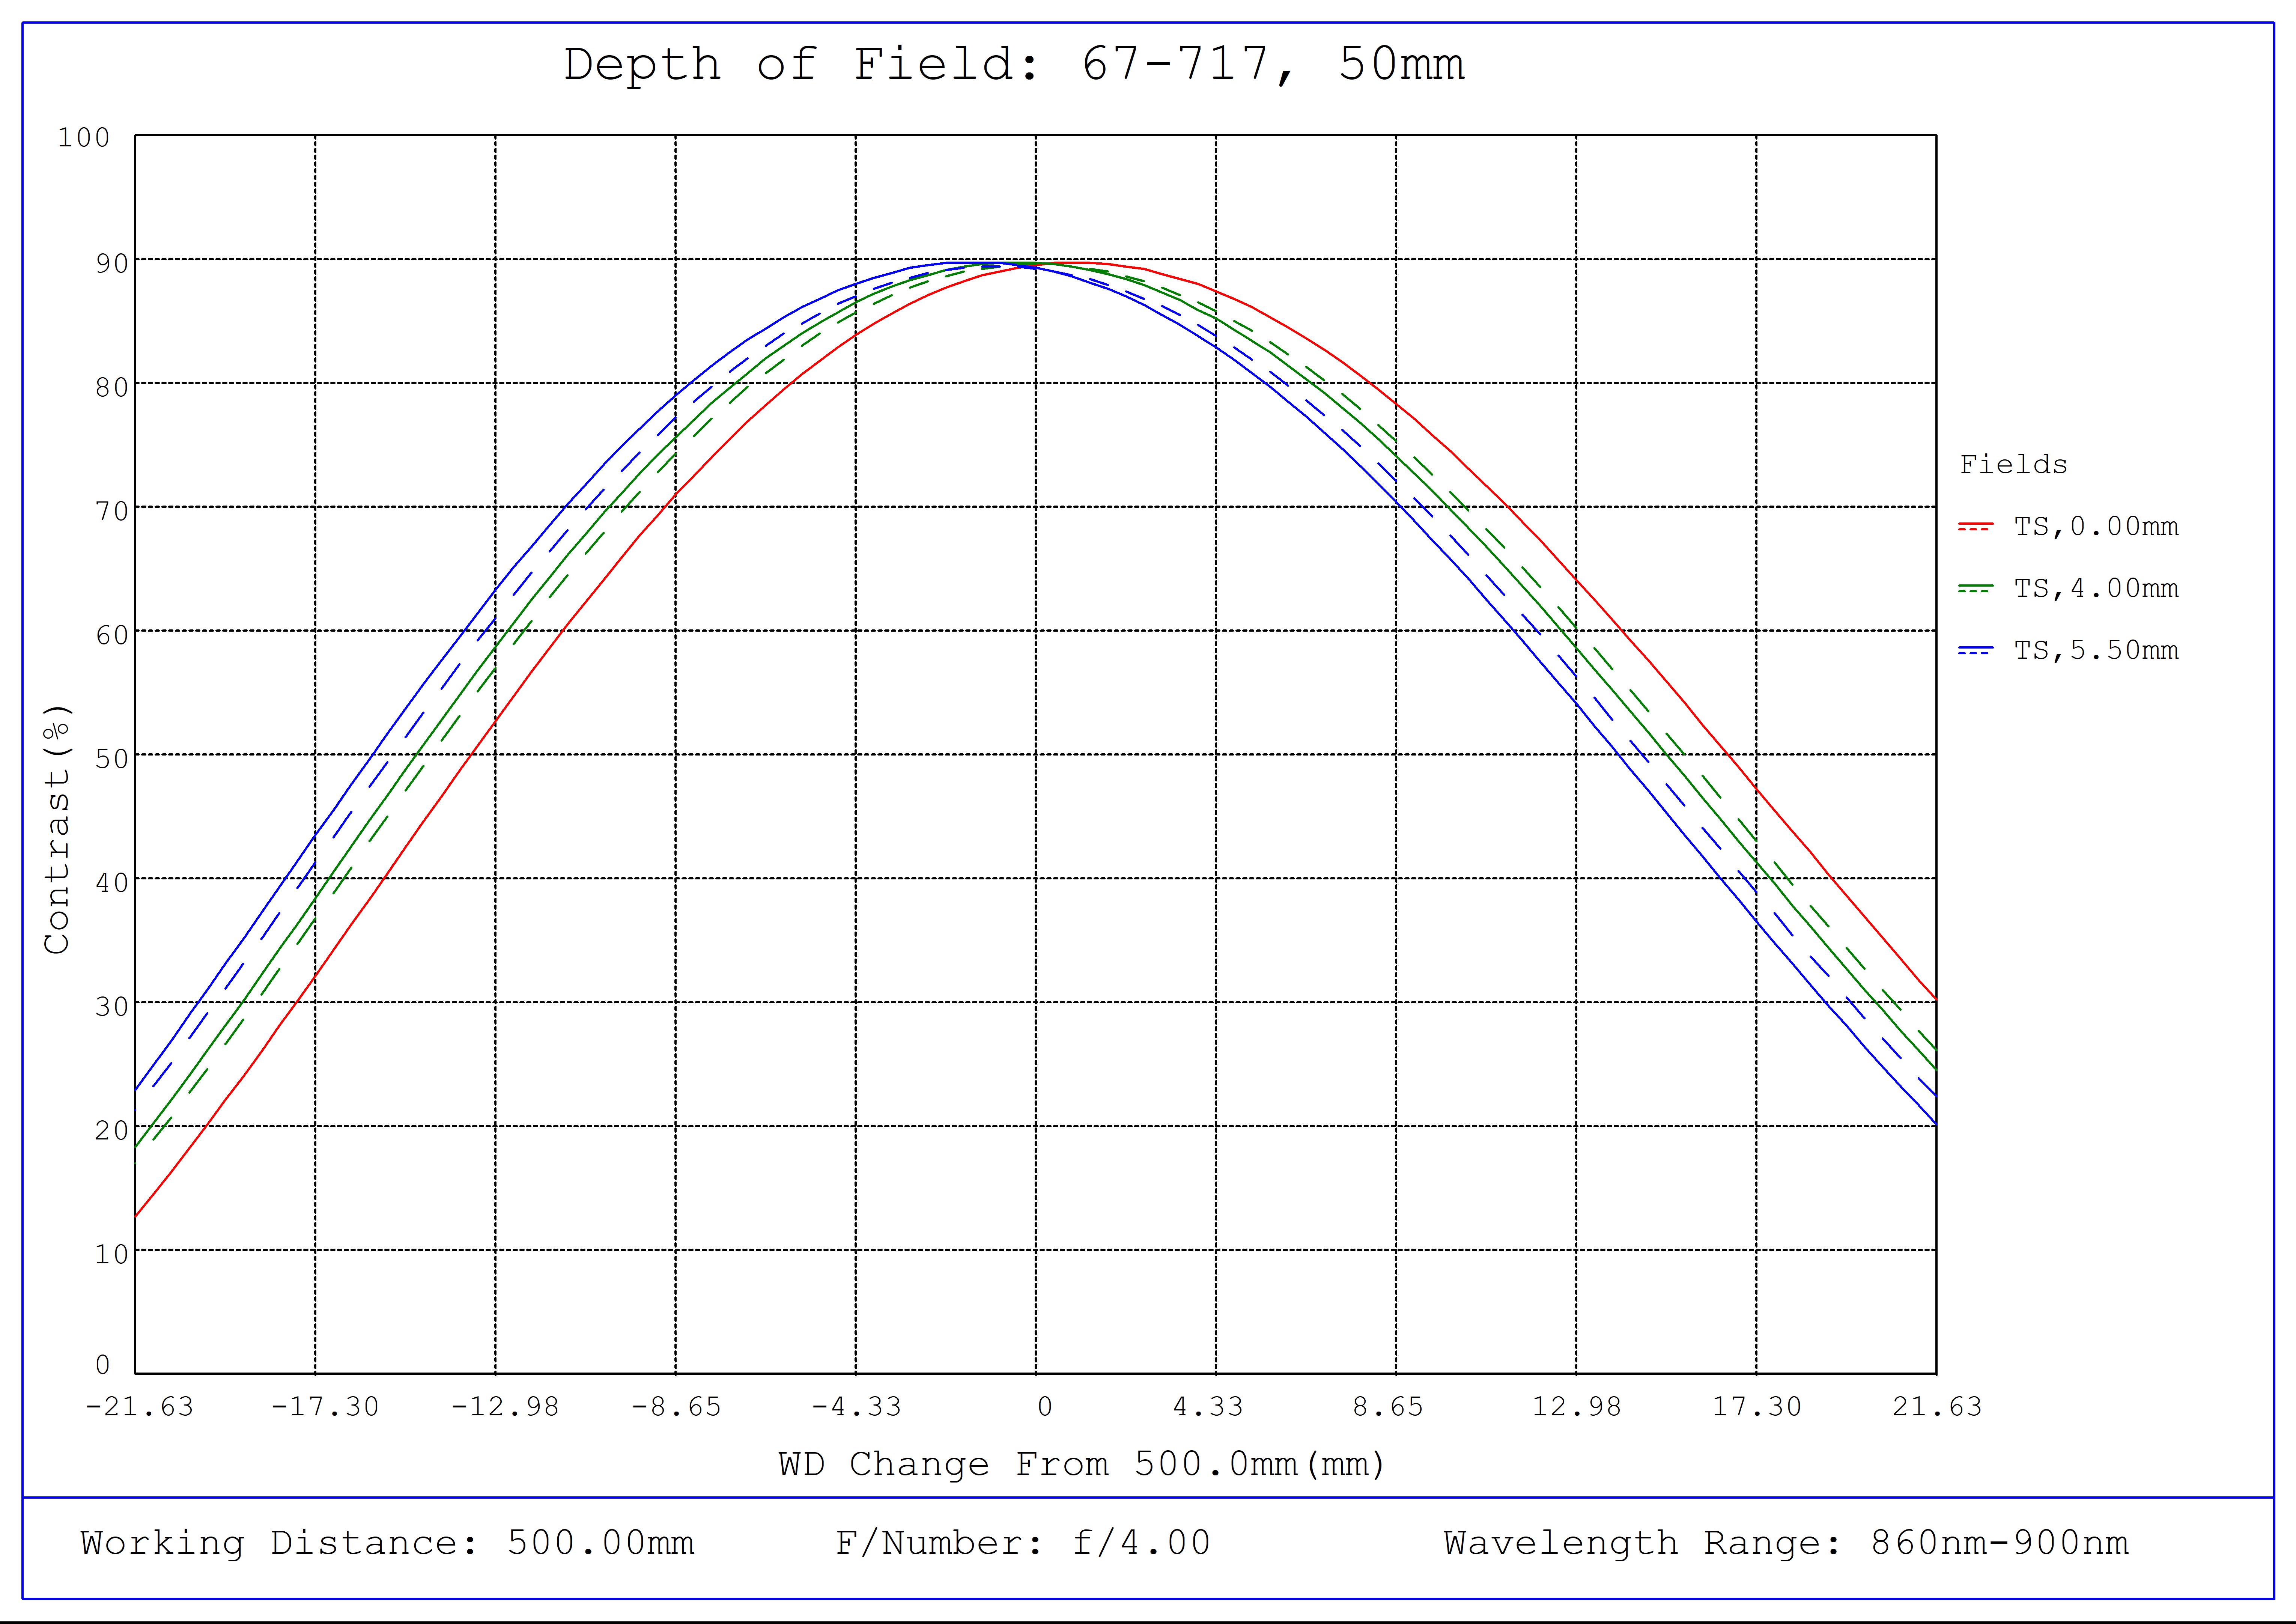 #67-717, 50mm C VIS-NIR Series Fixed Focal Length Lens, Depth of Field Plot (NIR), 500mm Working Distance, f4